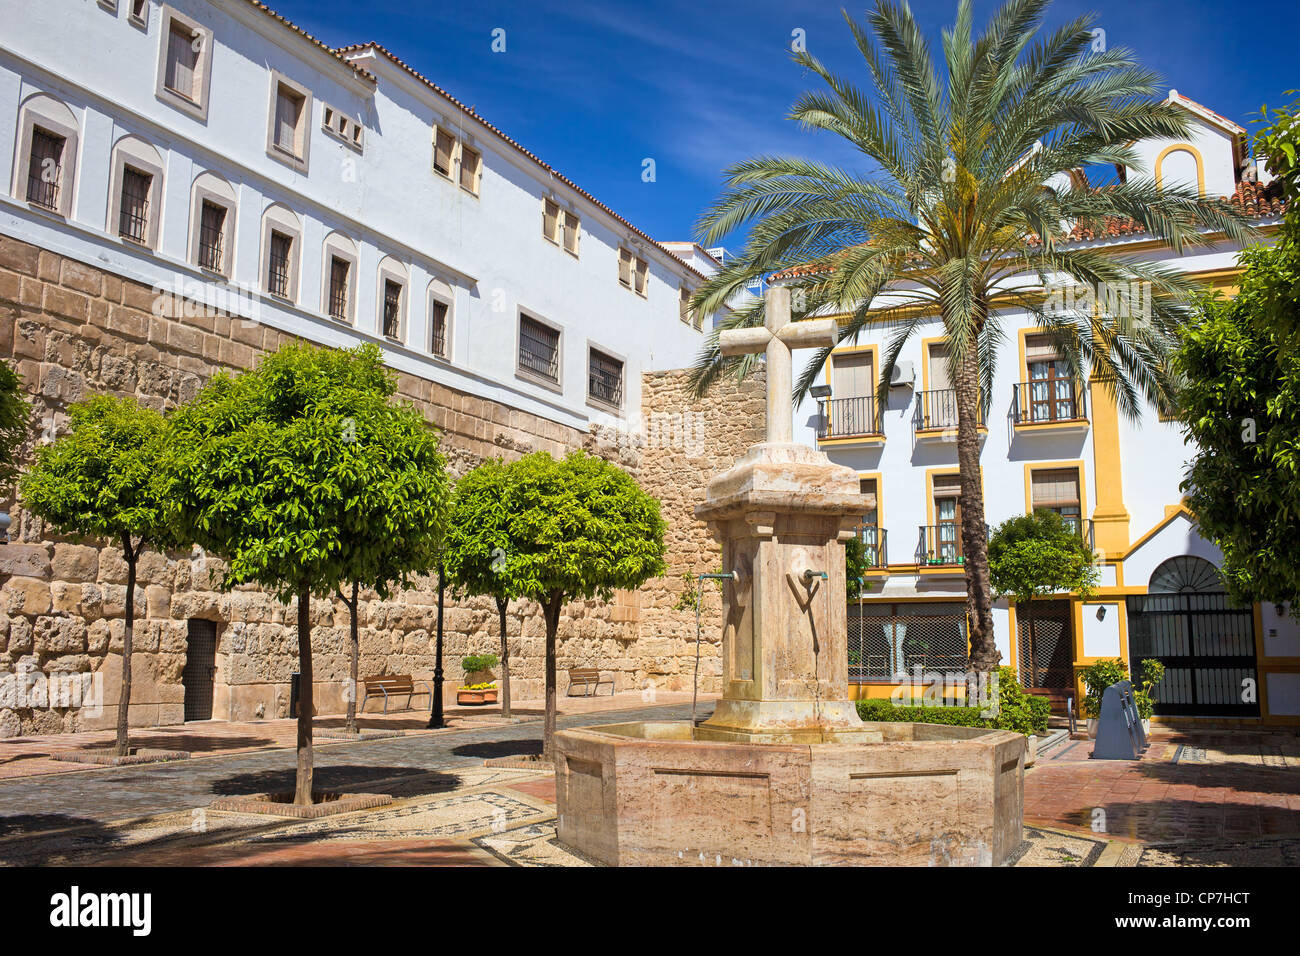 Church Square (Spanish: Plaza de la Iglesia) tranquil scenery in the Old Town of Marbella, Spain, Andalusia region Stock Photo